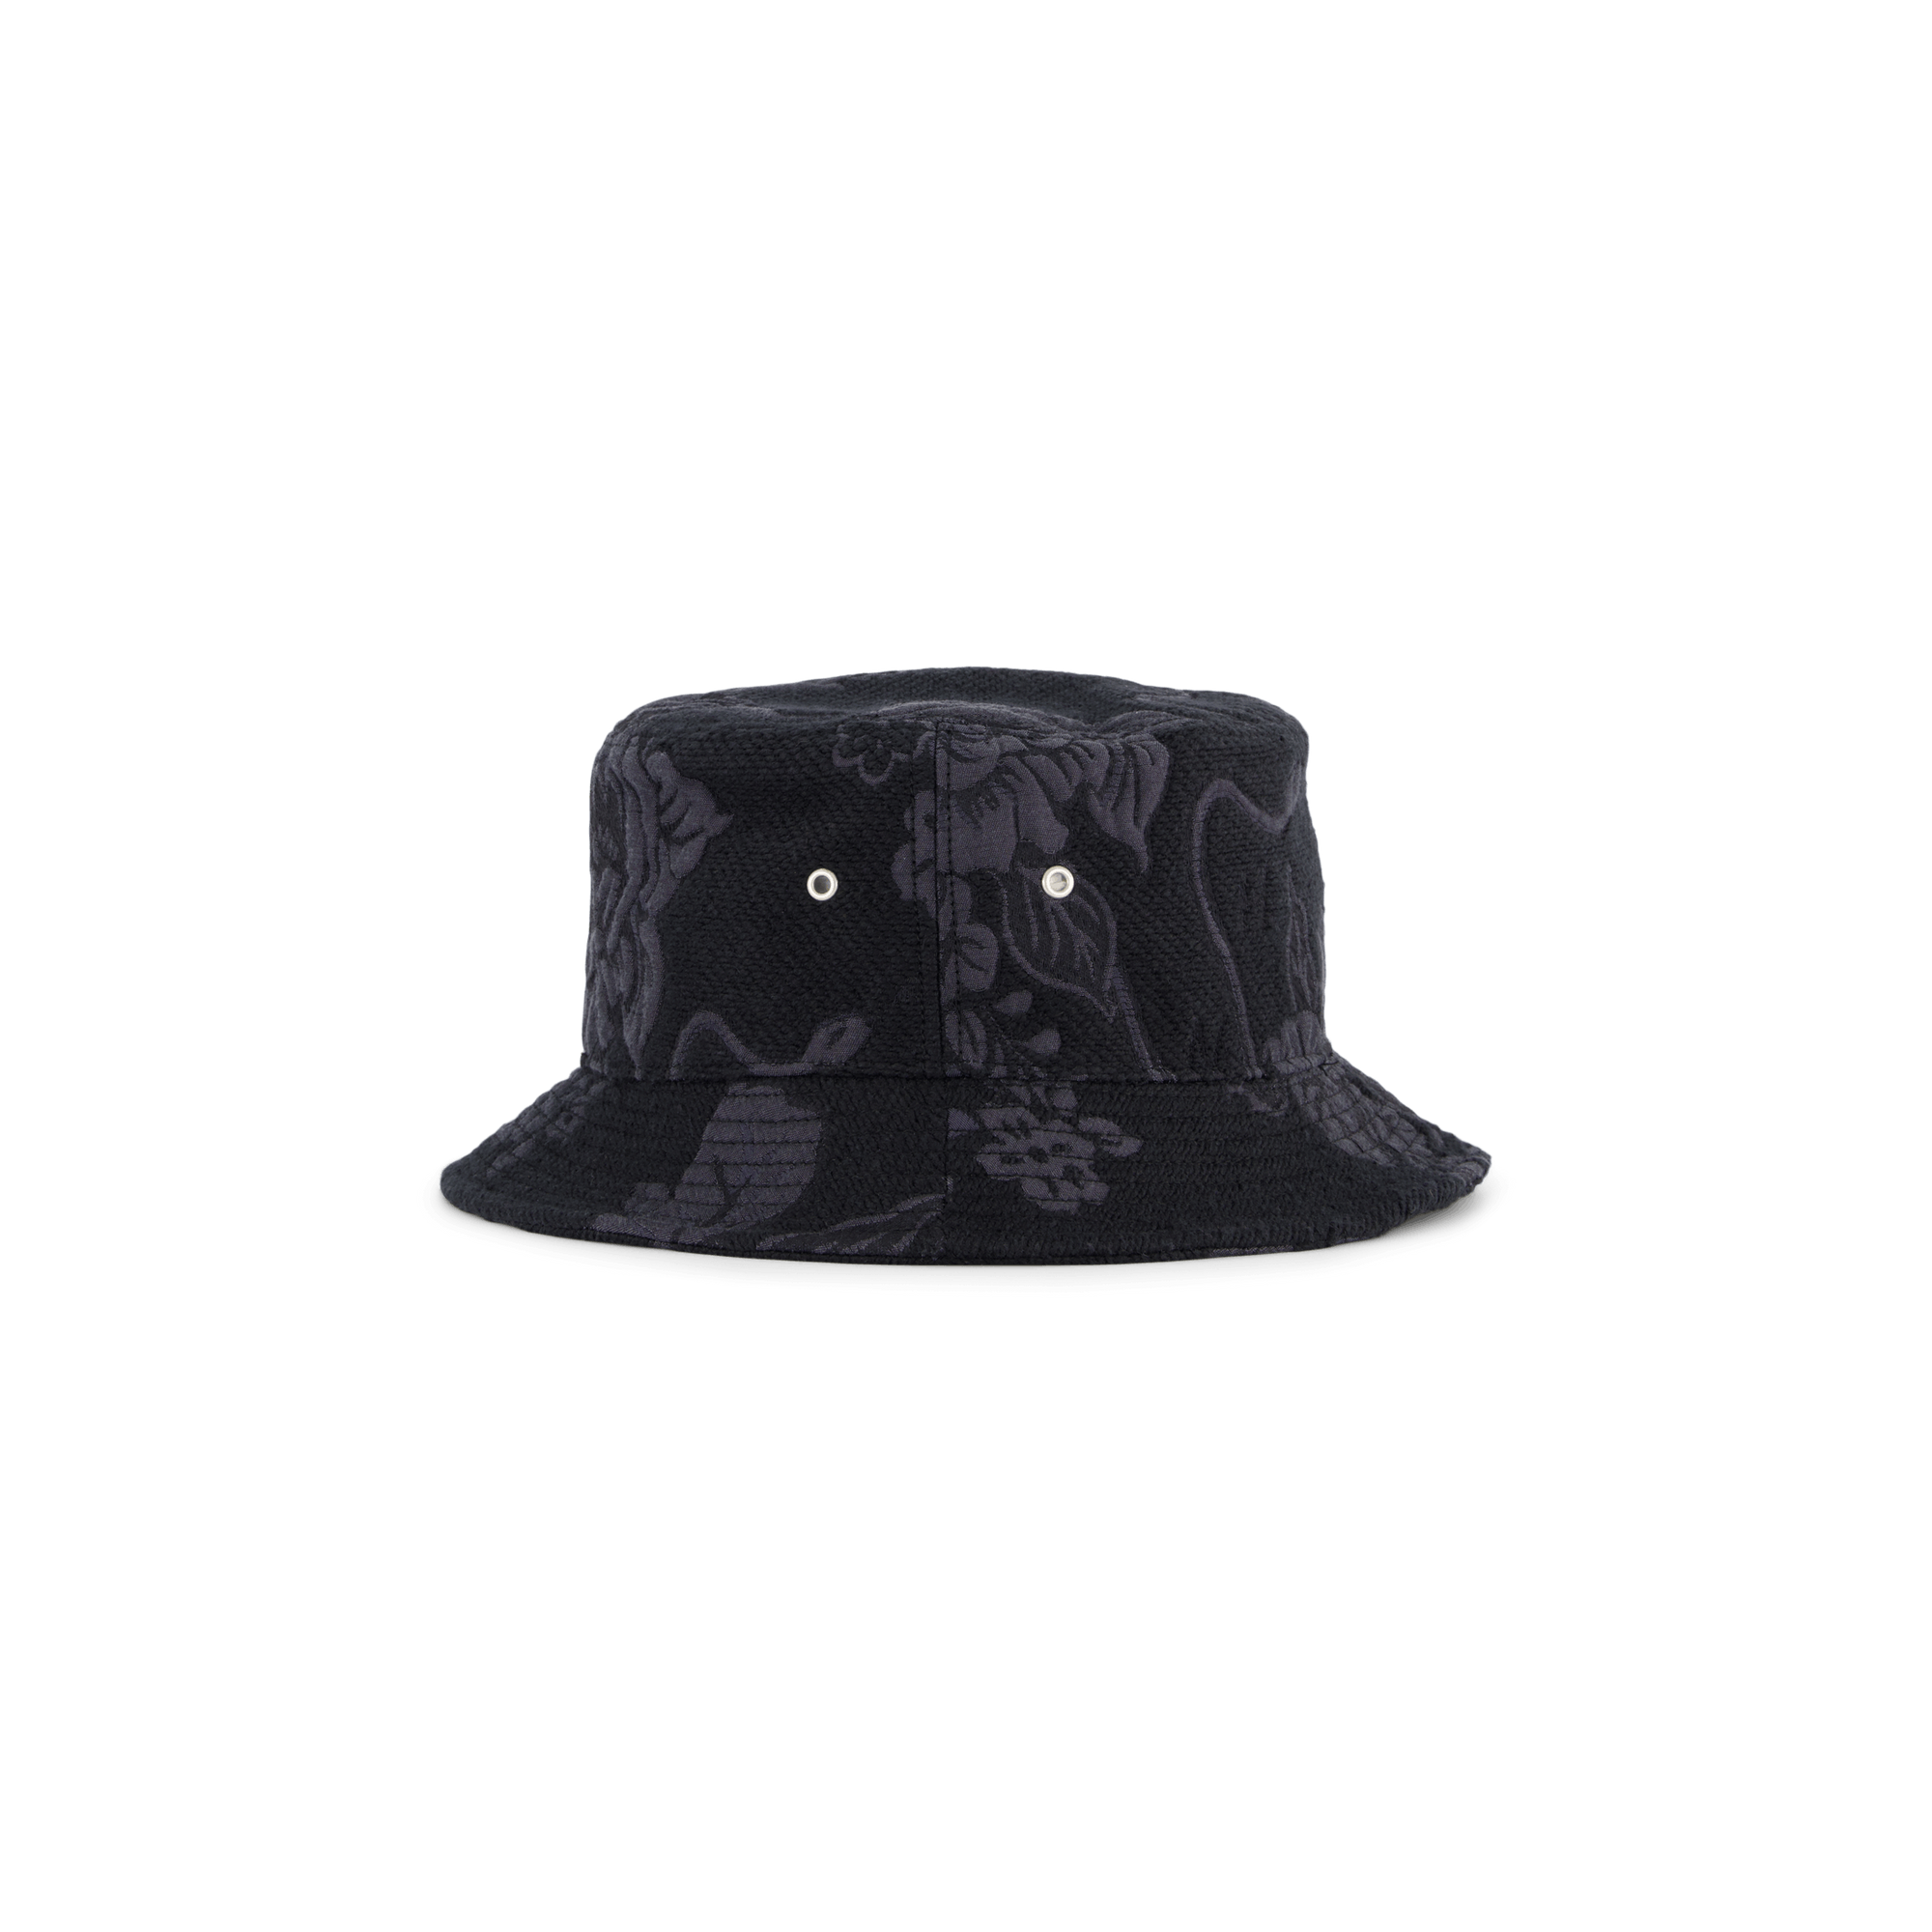 Jq Bucket Hat Black